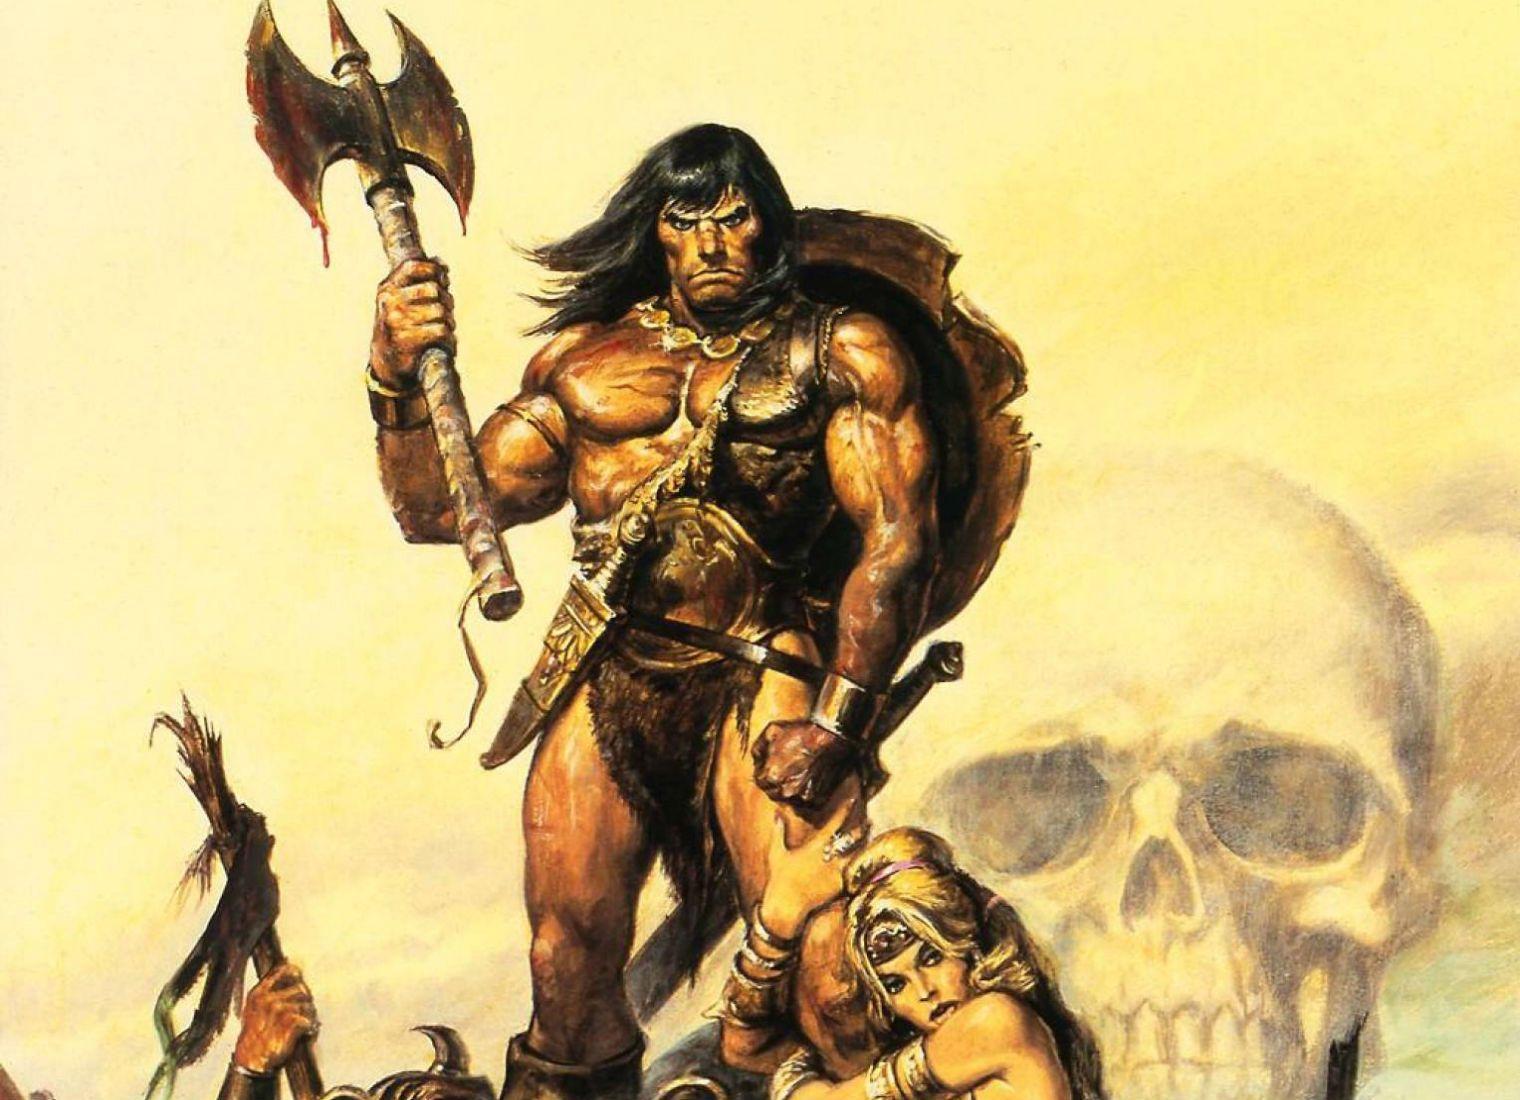 Conan The Barbarian Art HD Wallpaper, Backgrounds Image.